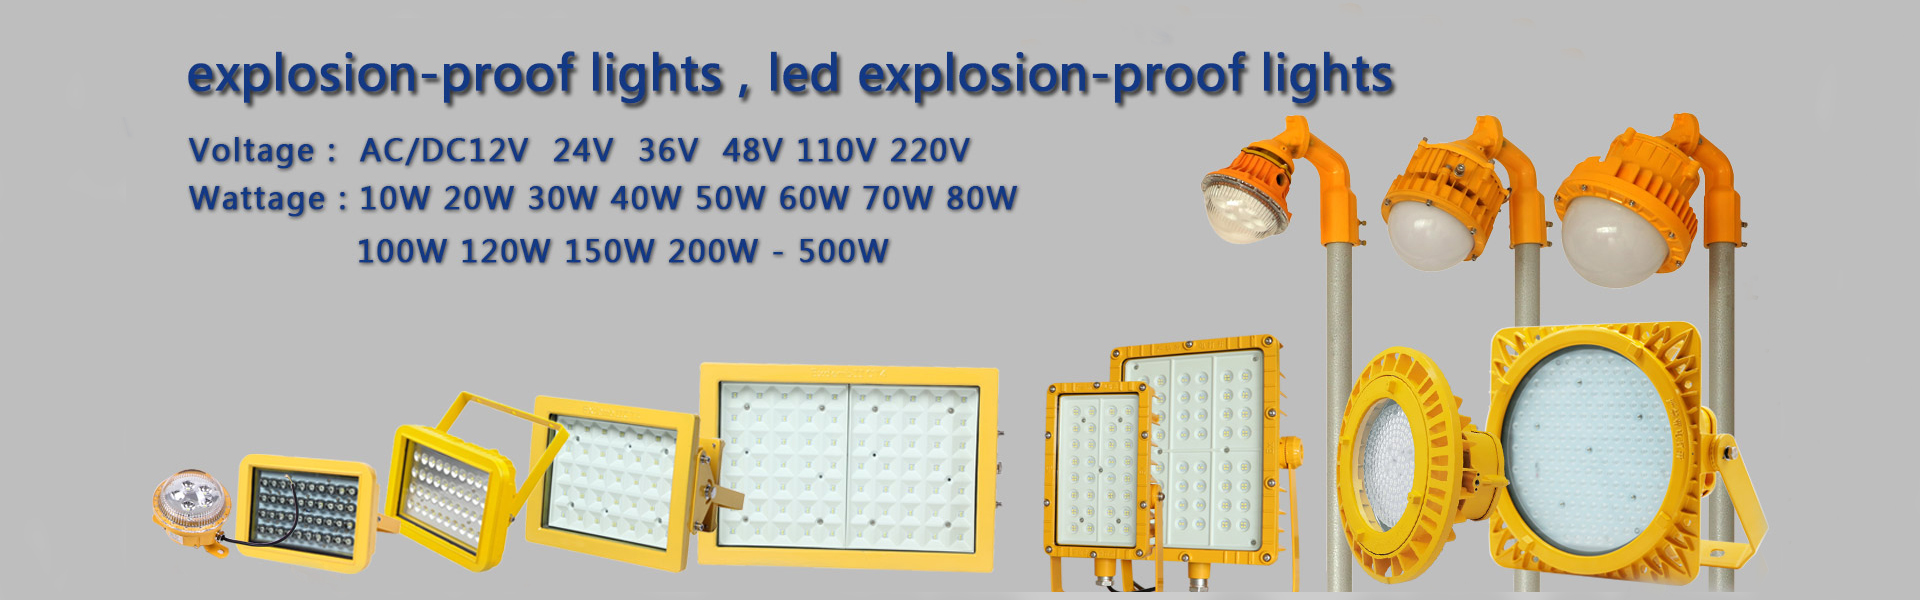 Explosion-proof mobile work light